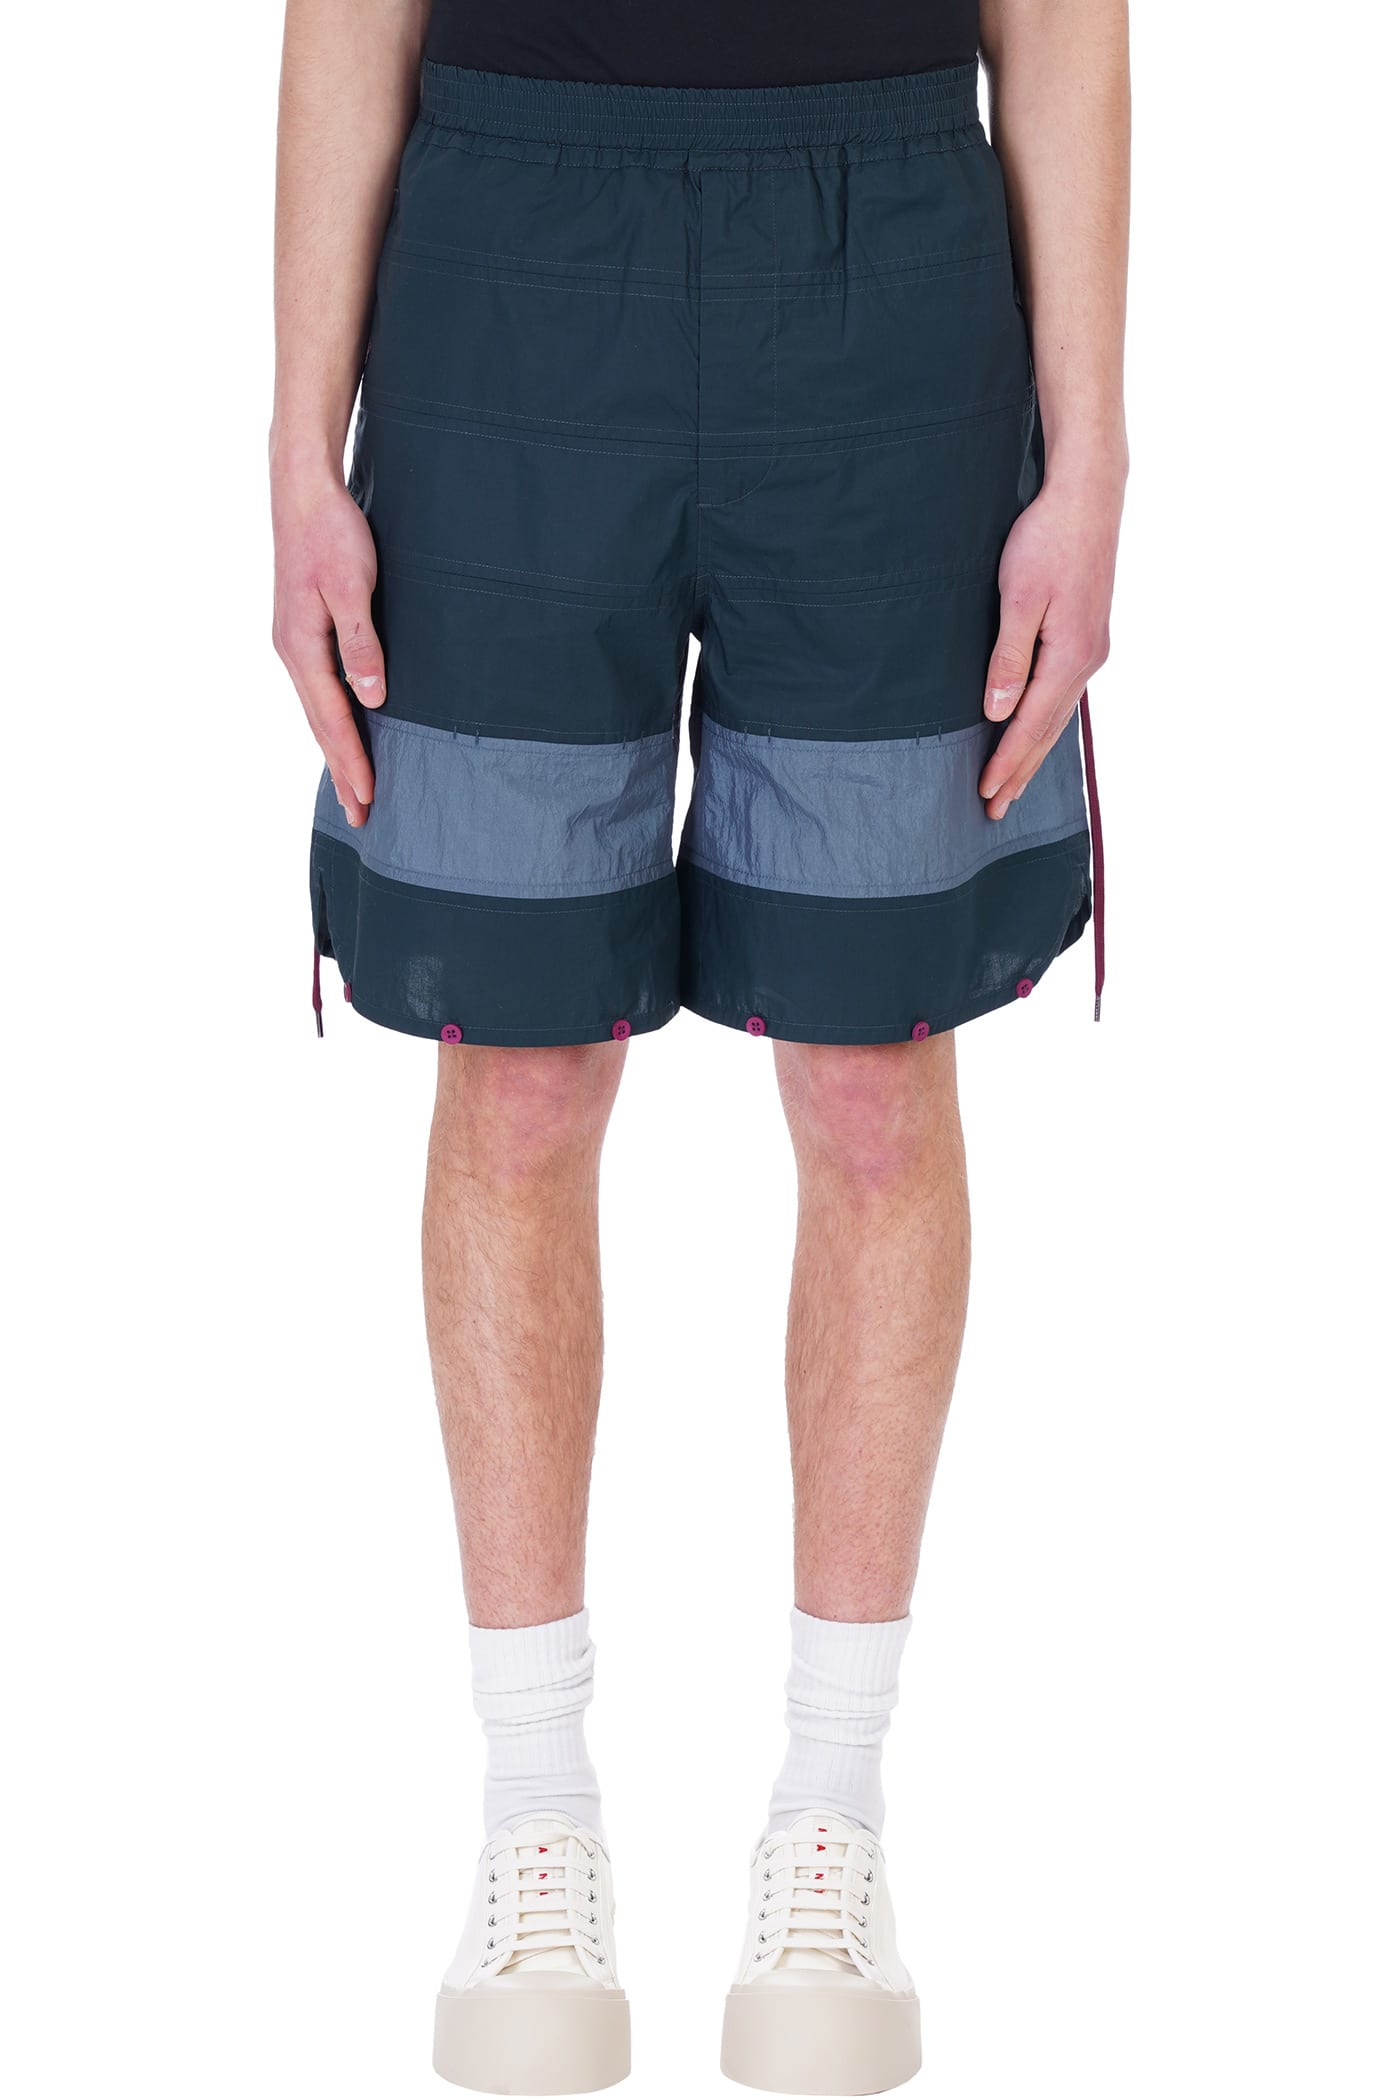 Craig Green Shorts In Blue Cotton